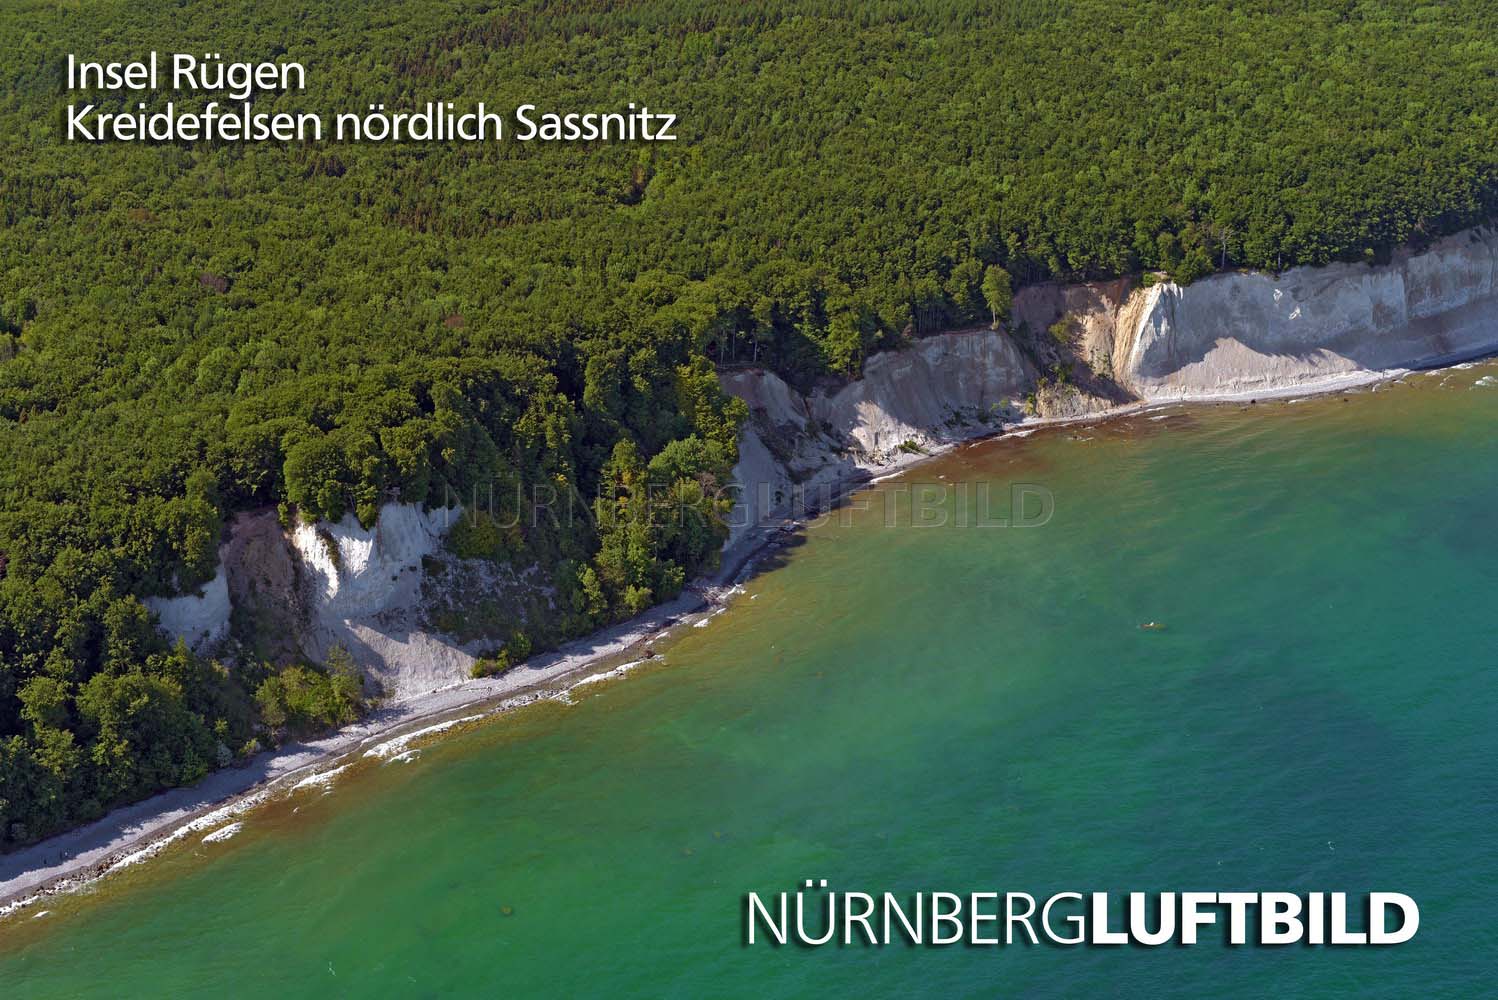 Insel Rügen, Kreidefelsen nördlich Sassnitz, Luftbild